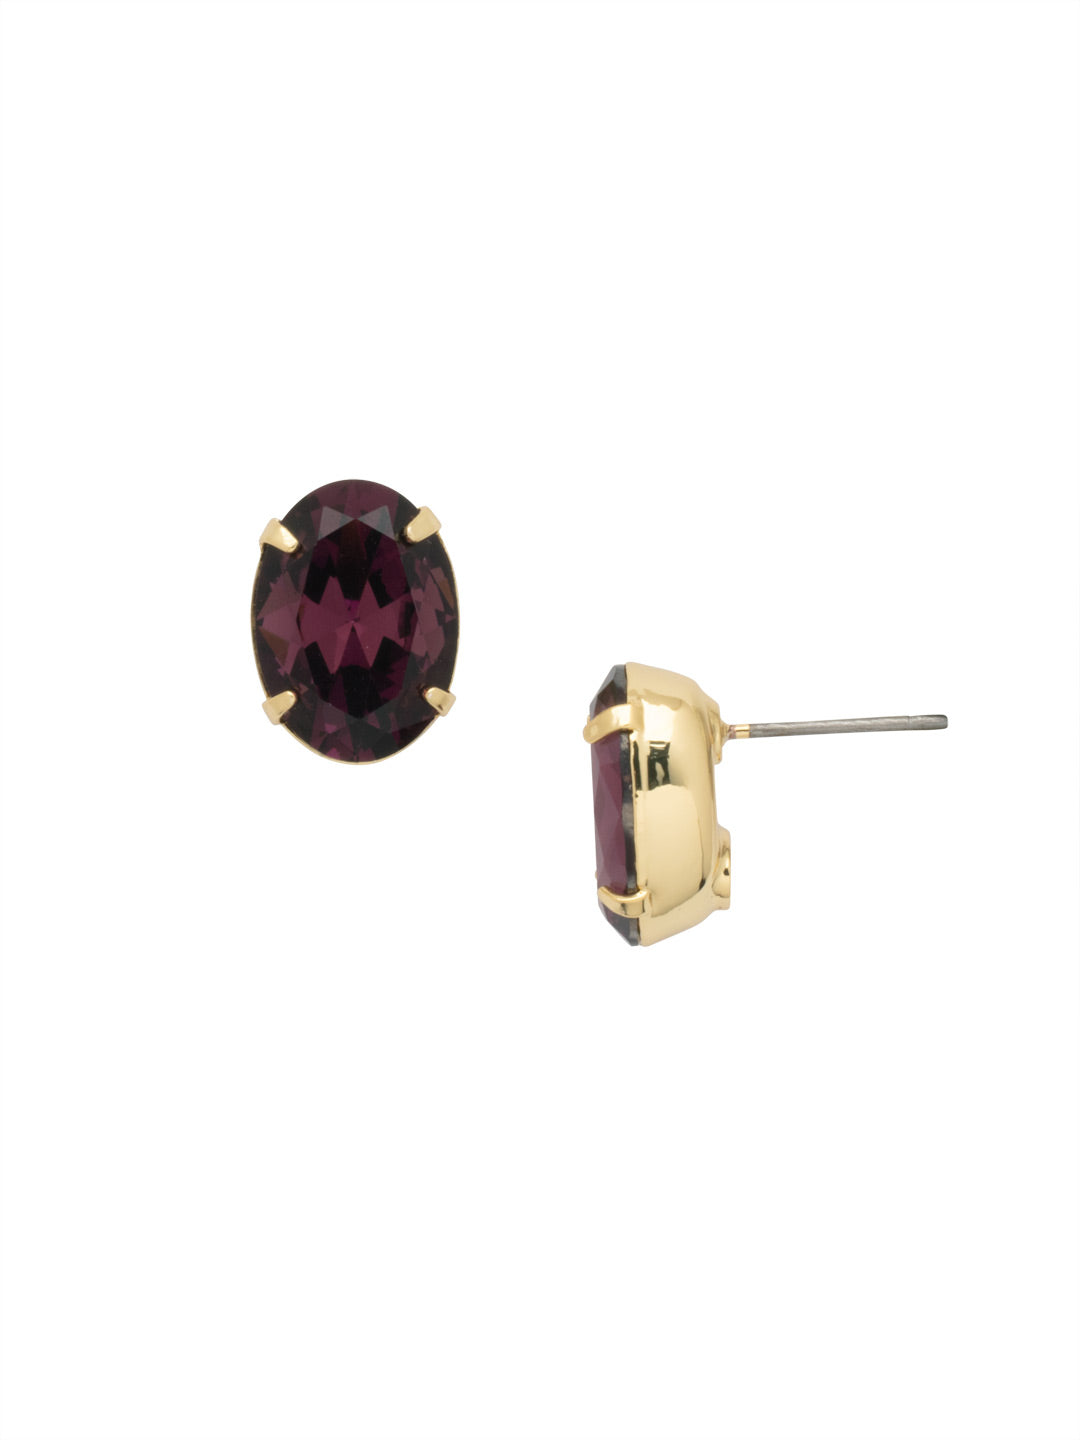 Product Image: Oval Cut Stud Earrings